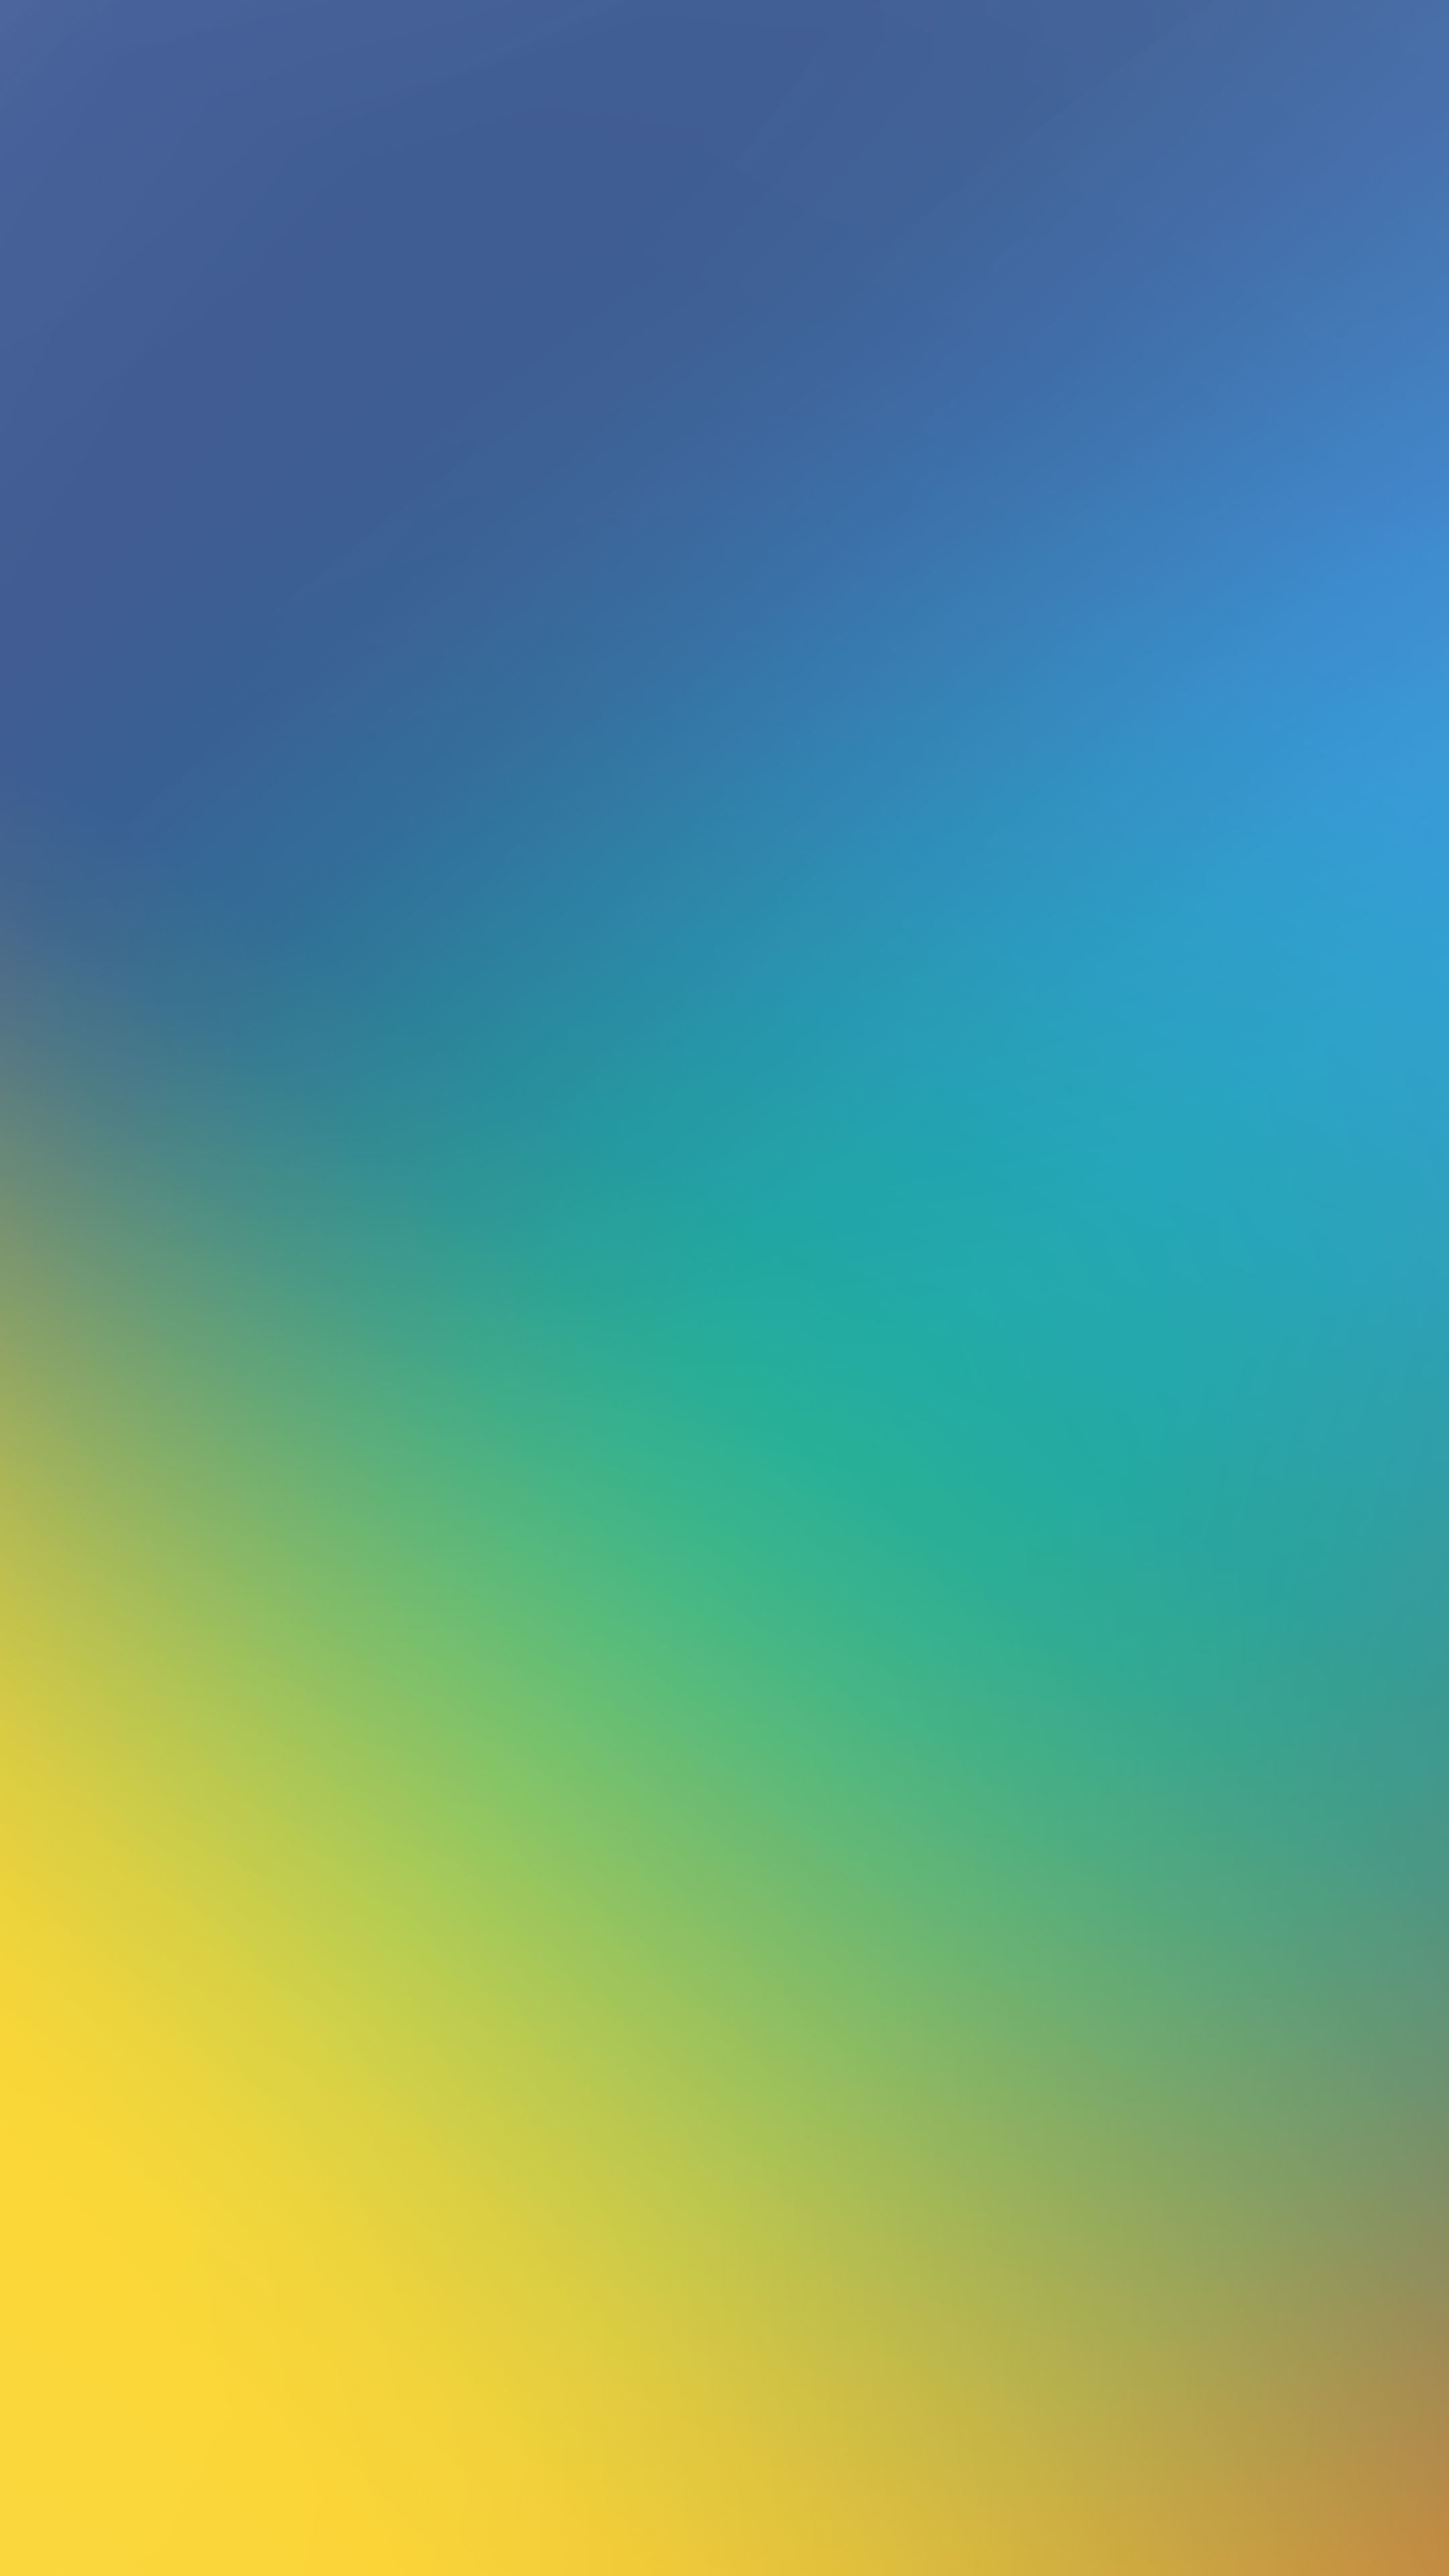 2160x3840  wallpaper Gradient, blue yellow, abstract, 4k